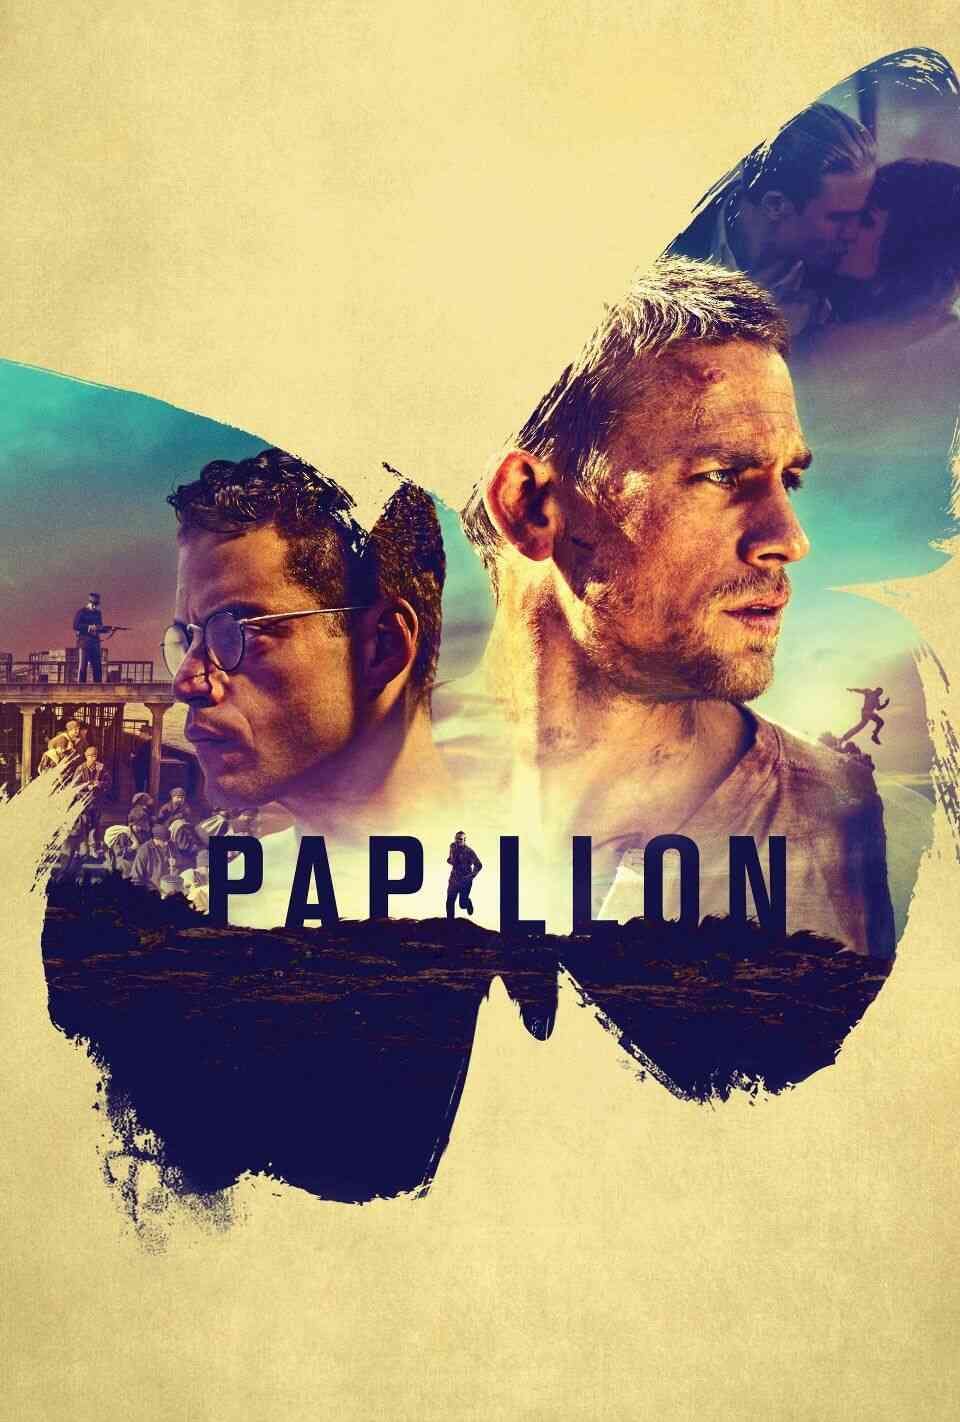 Read Papillon screenplay (poster)